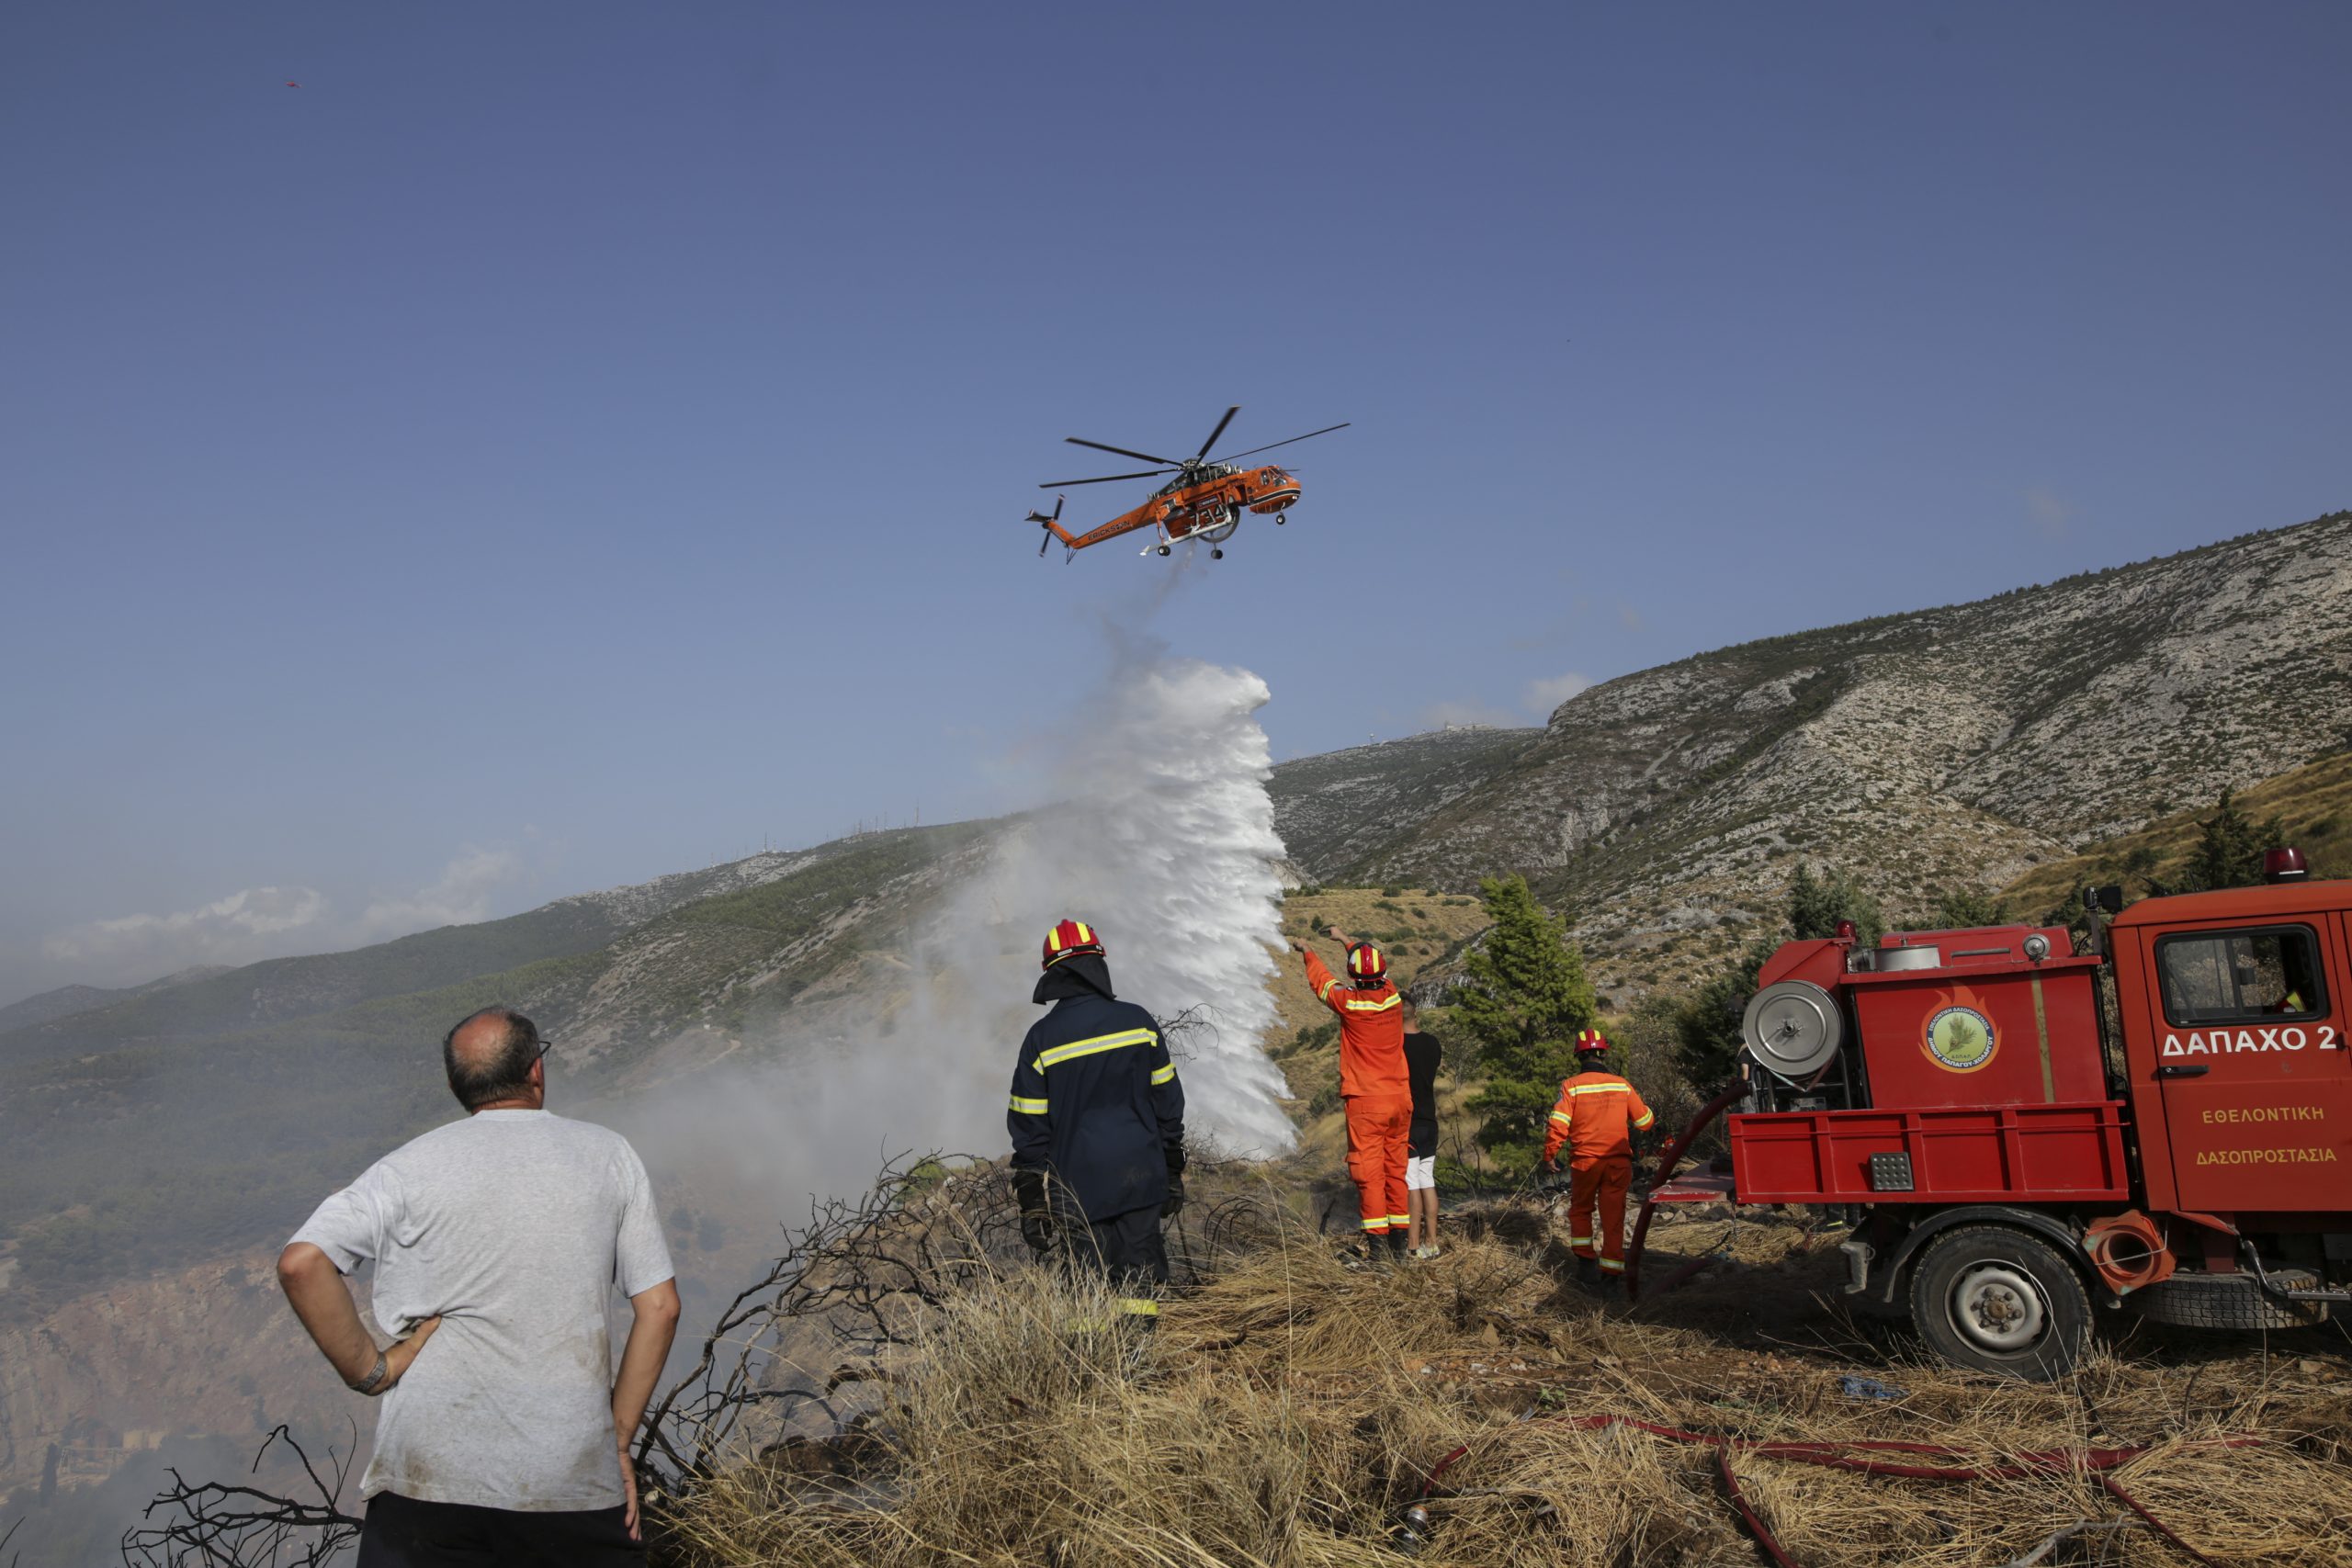 No active fire fronts in Penteli, Megara and Salamina